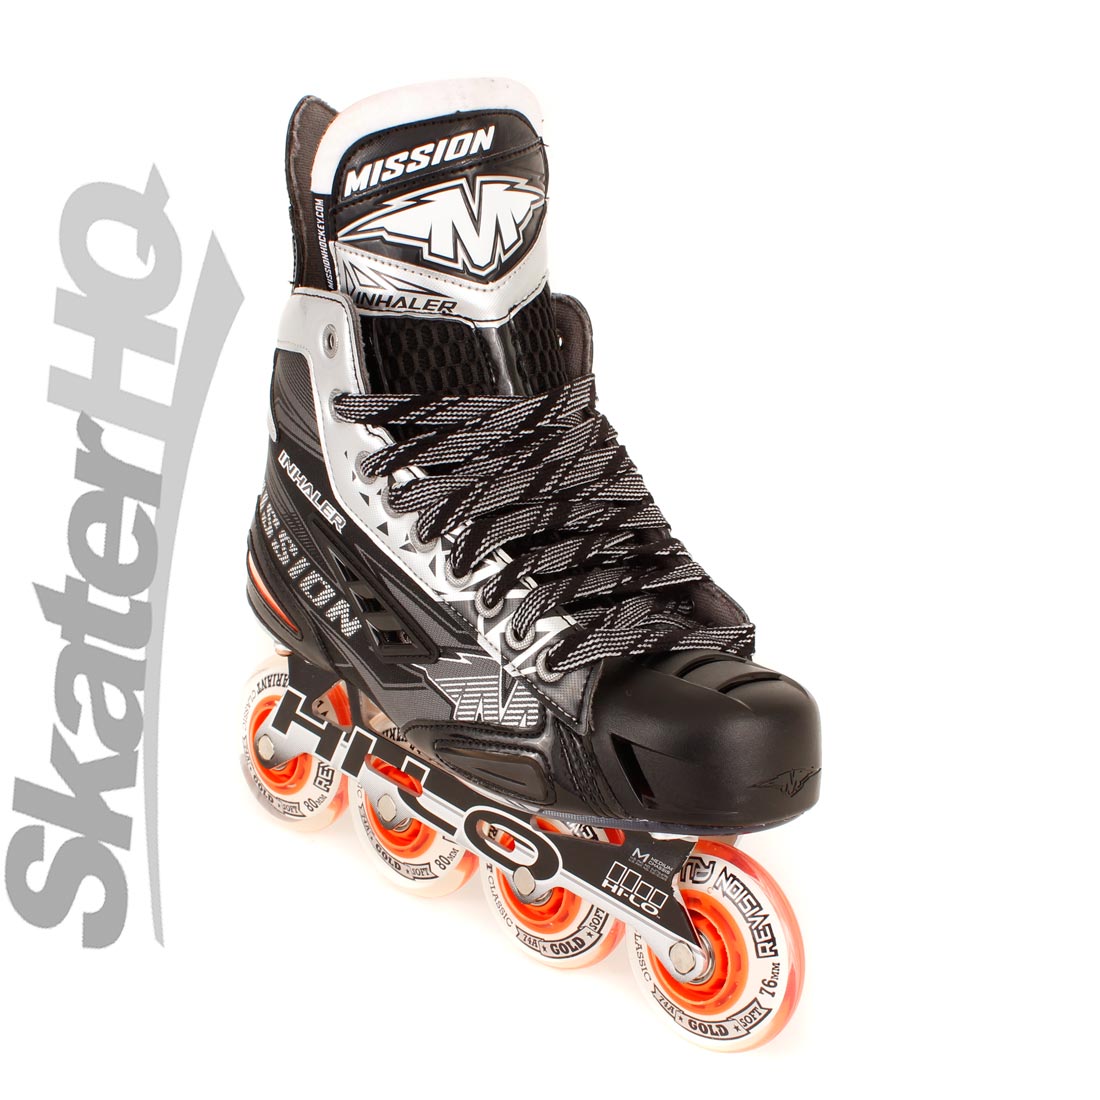 Mission Inhaler NLS3 Skate - 8US Inline Hockey Skates